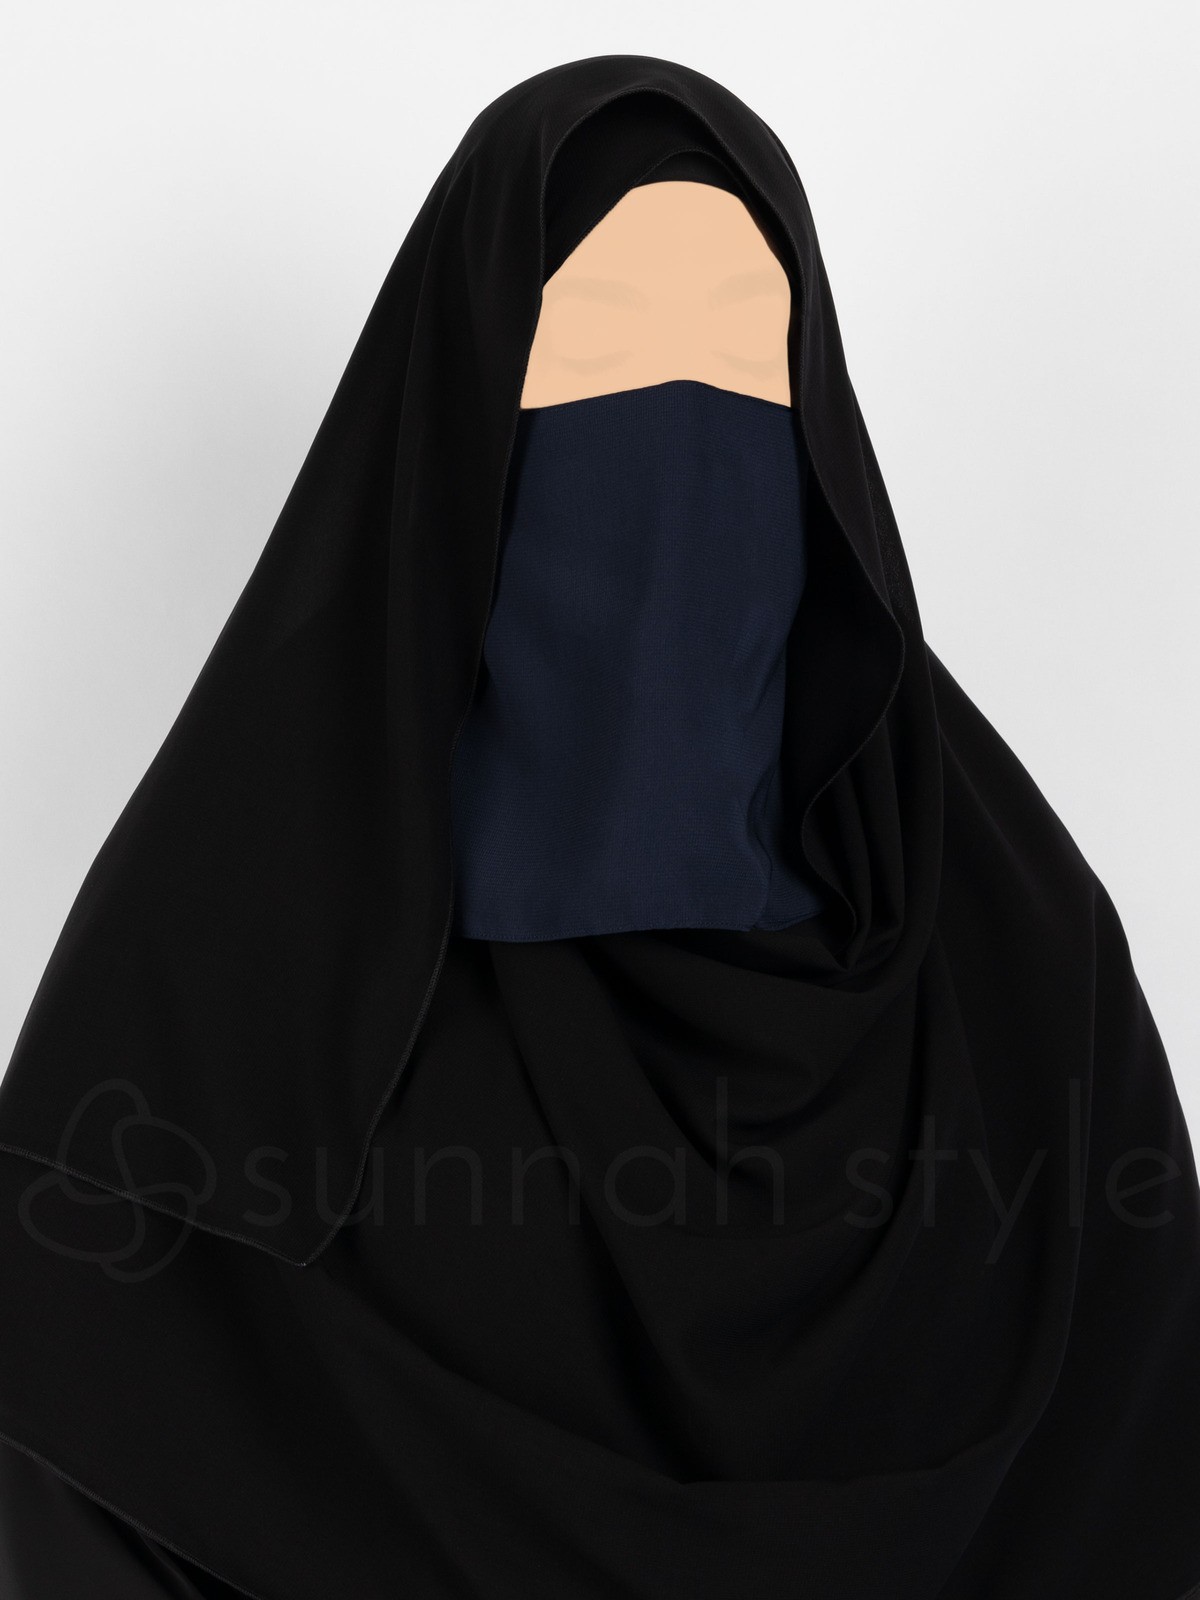 Sunnah Style - Short Elastic Half Niqab (Navy Blue)